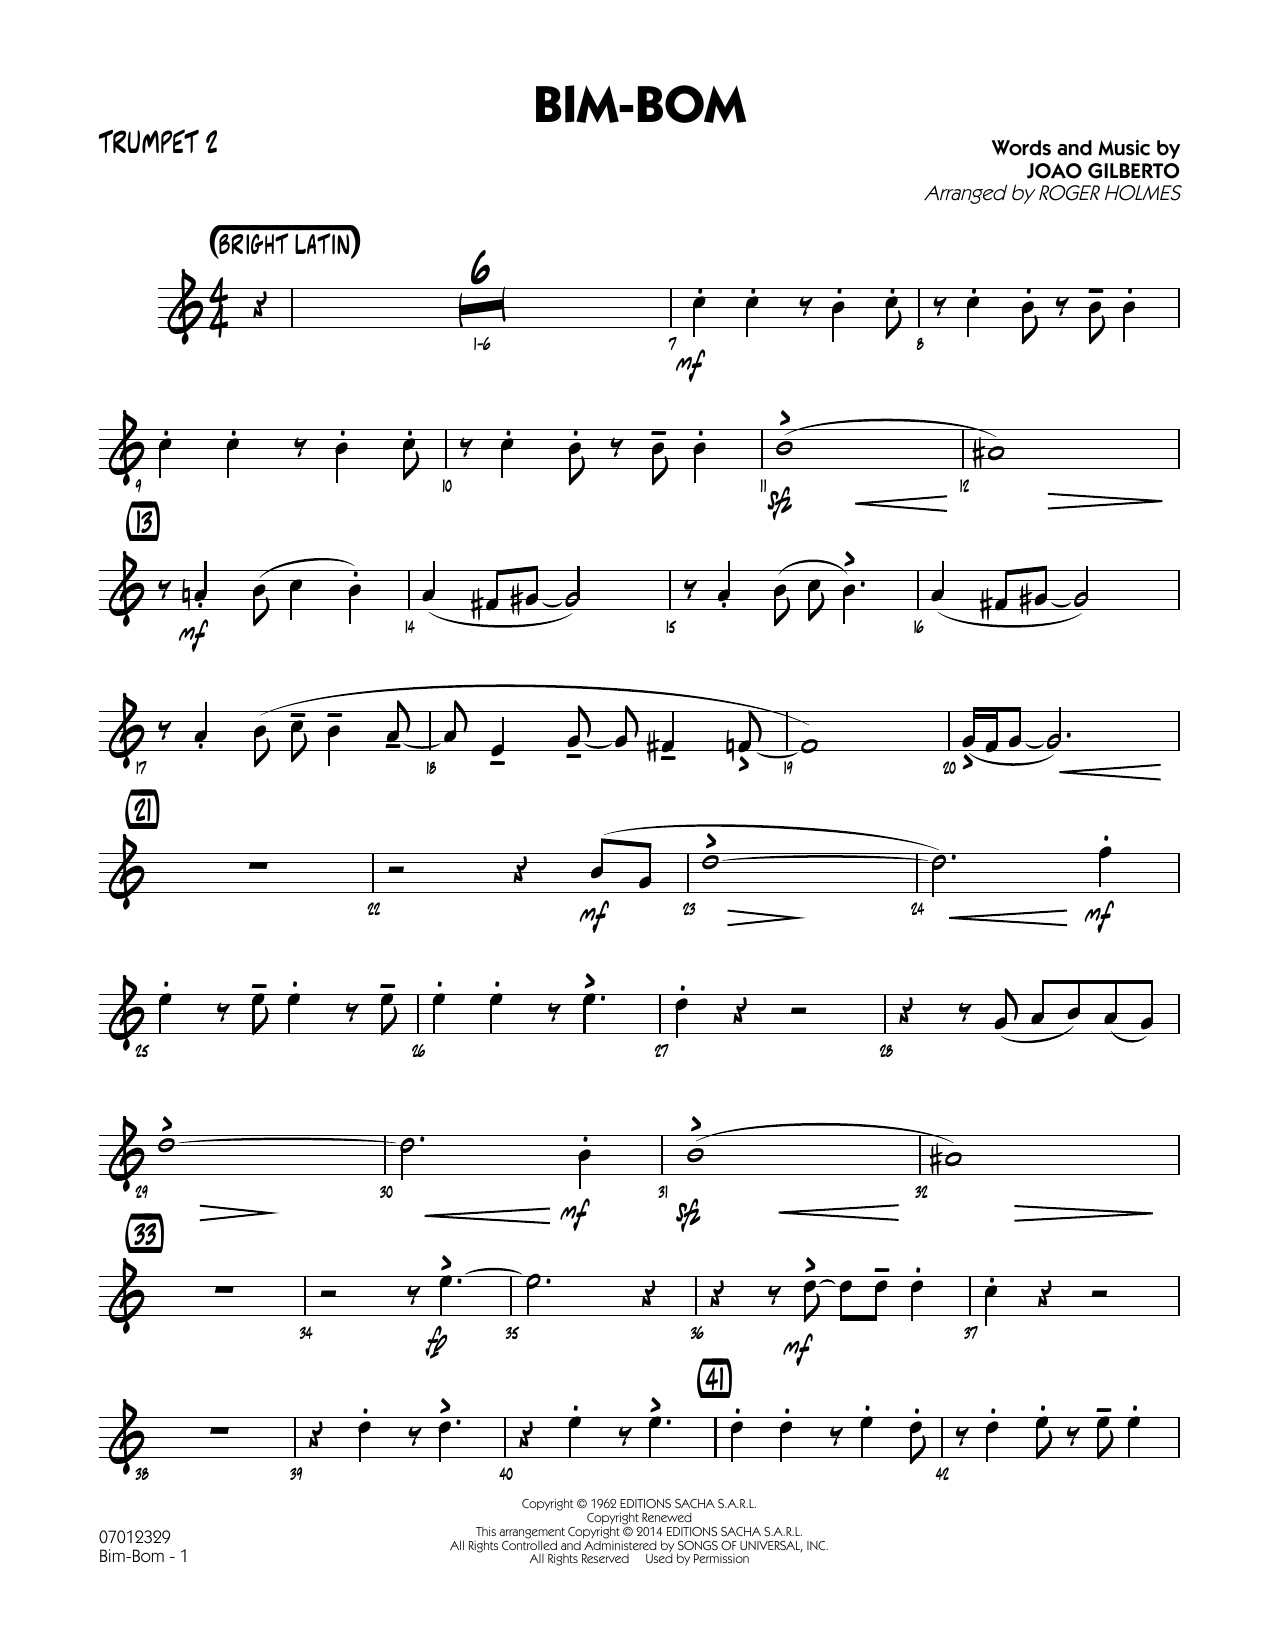 Roger Holmes Bim-Bom - Trumpet 2 sheet music notes and chords. Download Printable PDF.